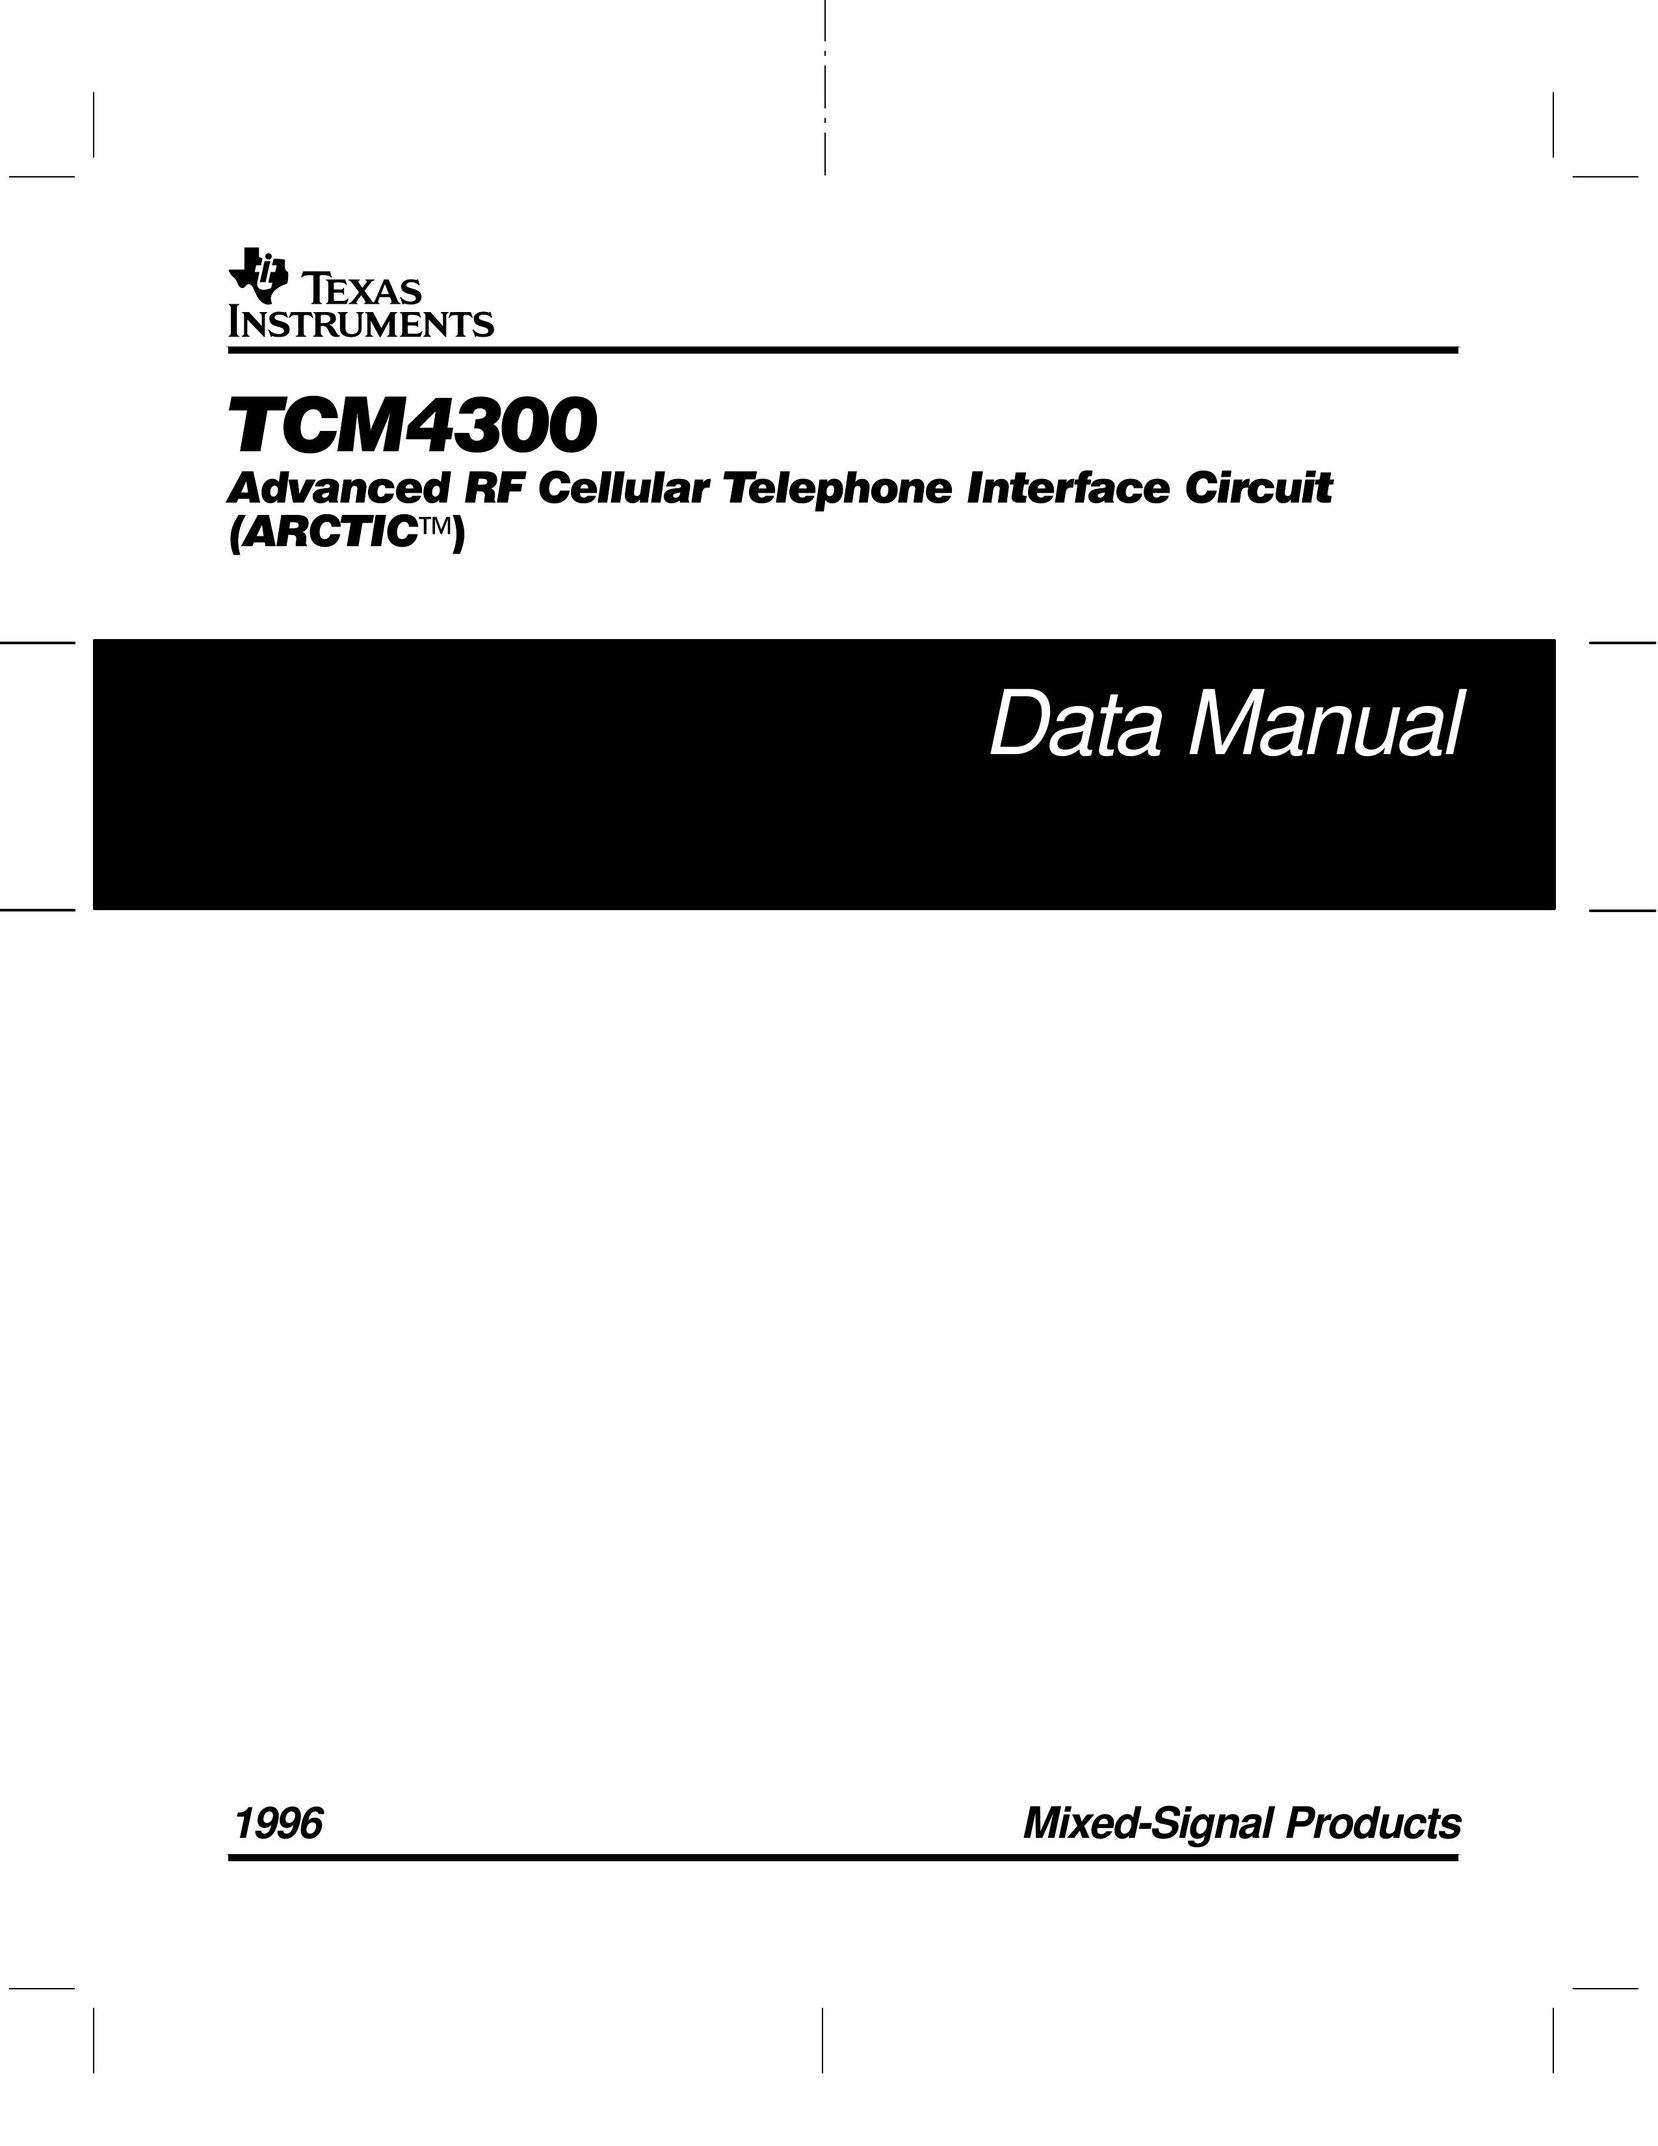 Texas Instruments TCM4300 Telephone User Manual